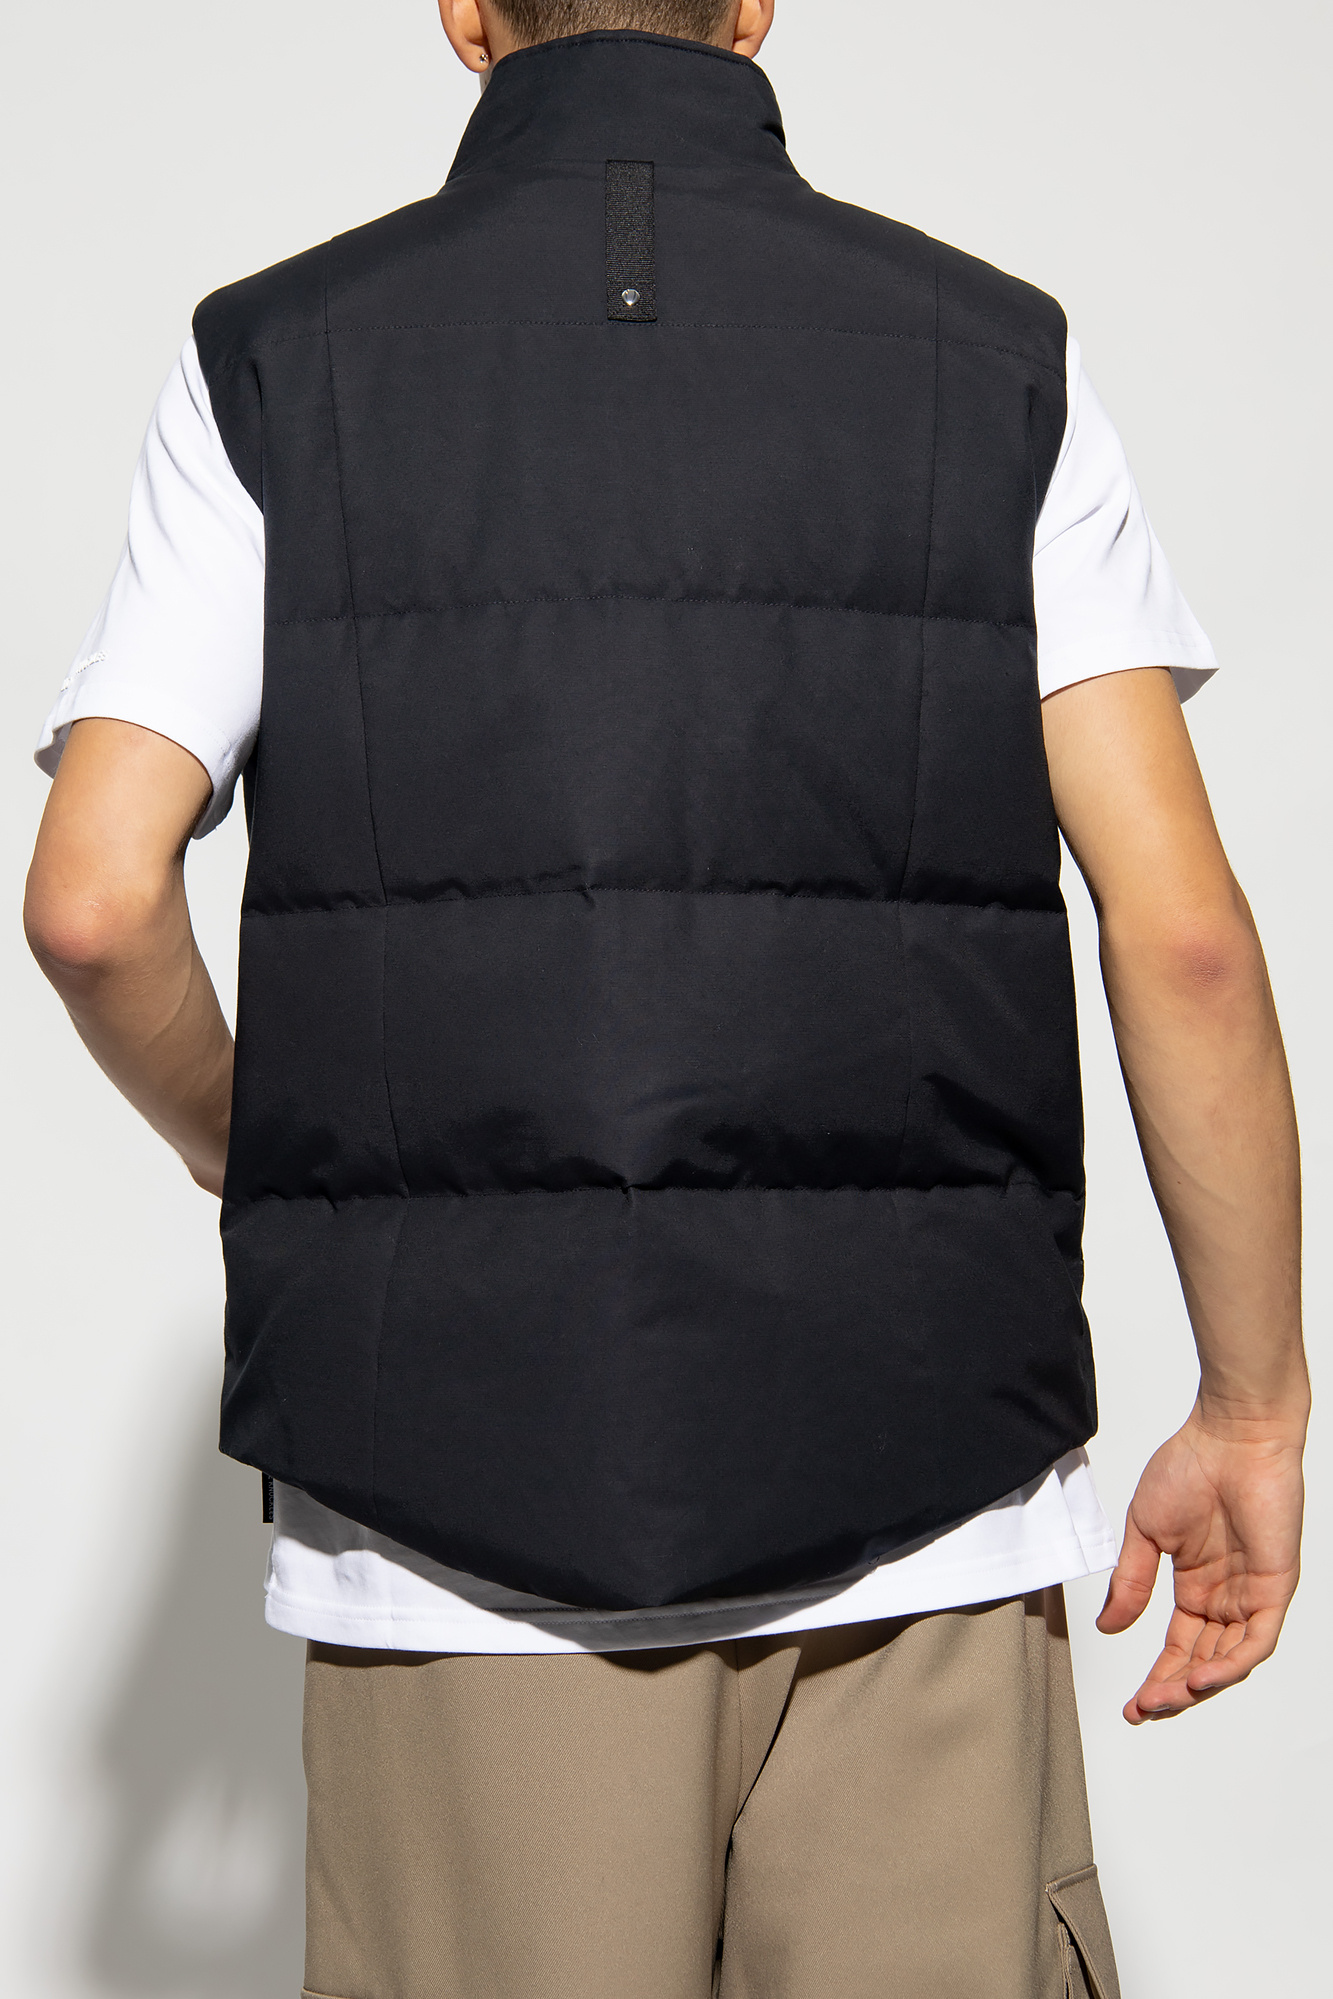 Moose Knuckles 'Montreal' vest | Men's Clothing | Vitkac